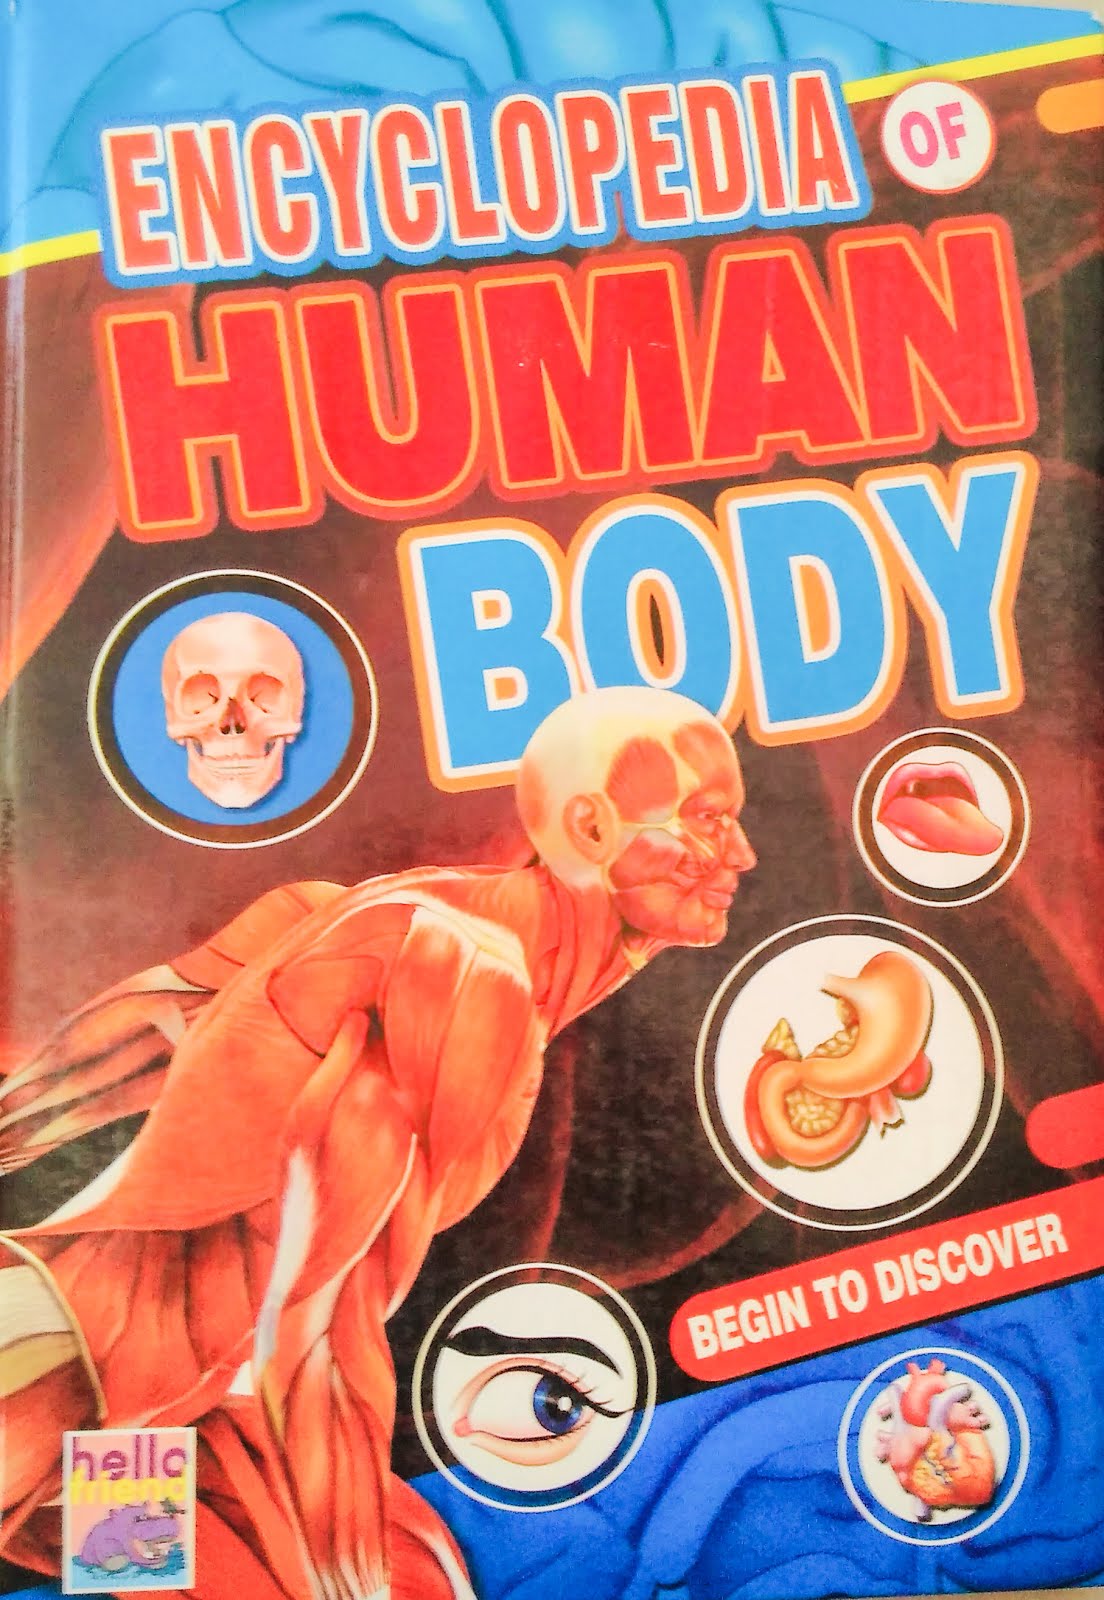 Best Encyclopedia on Human Body